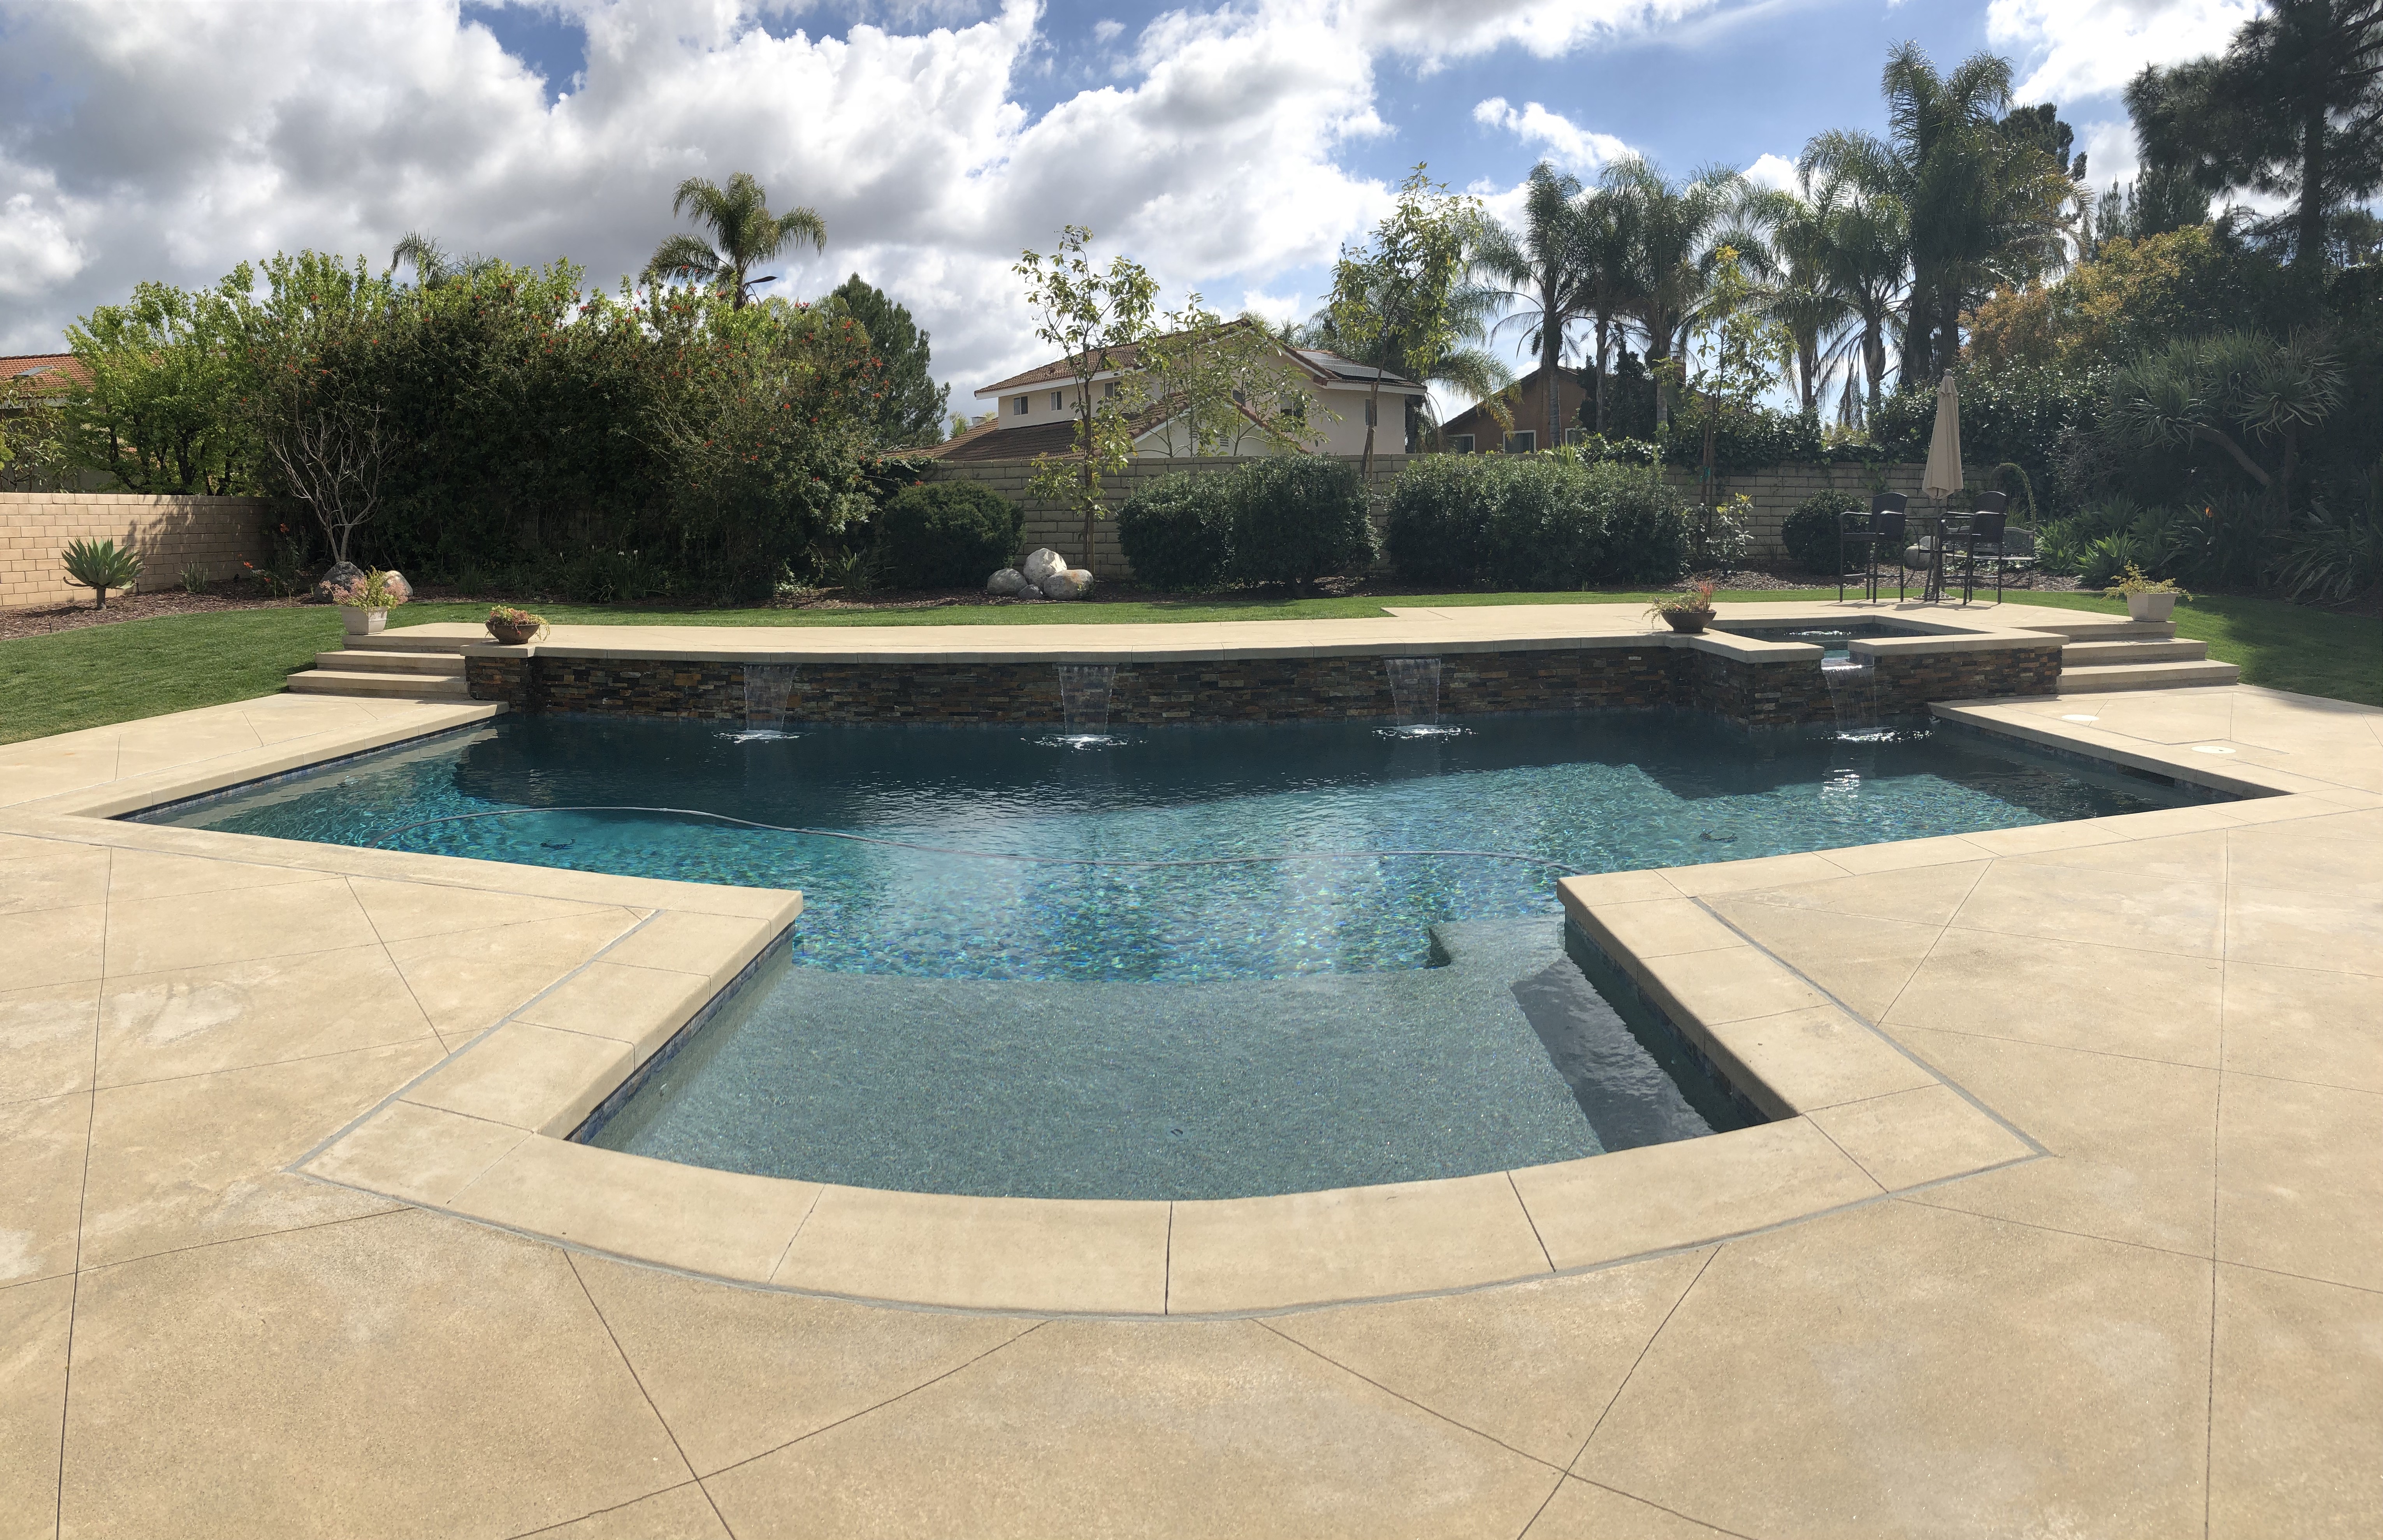 A pool in Huntington Beach